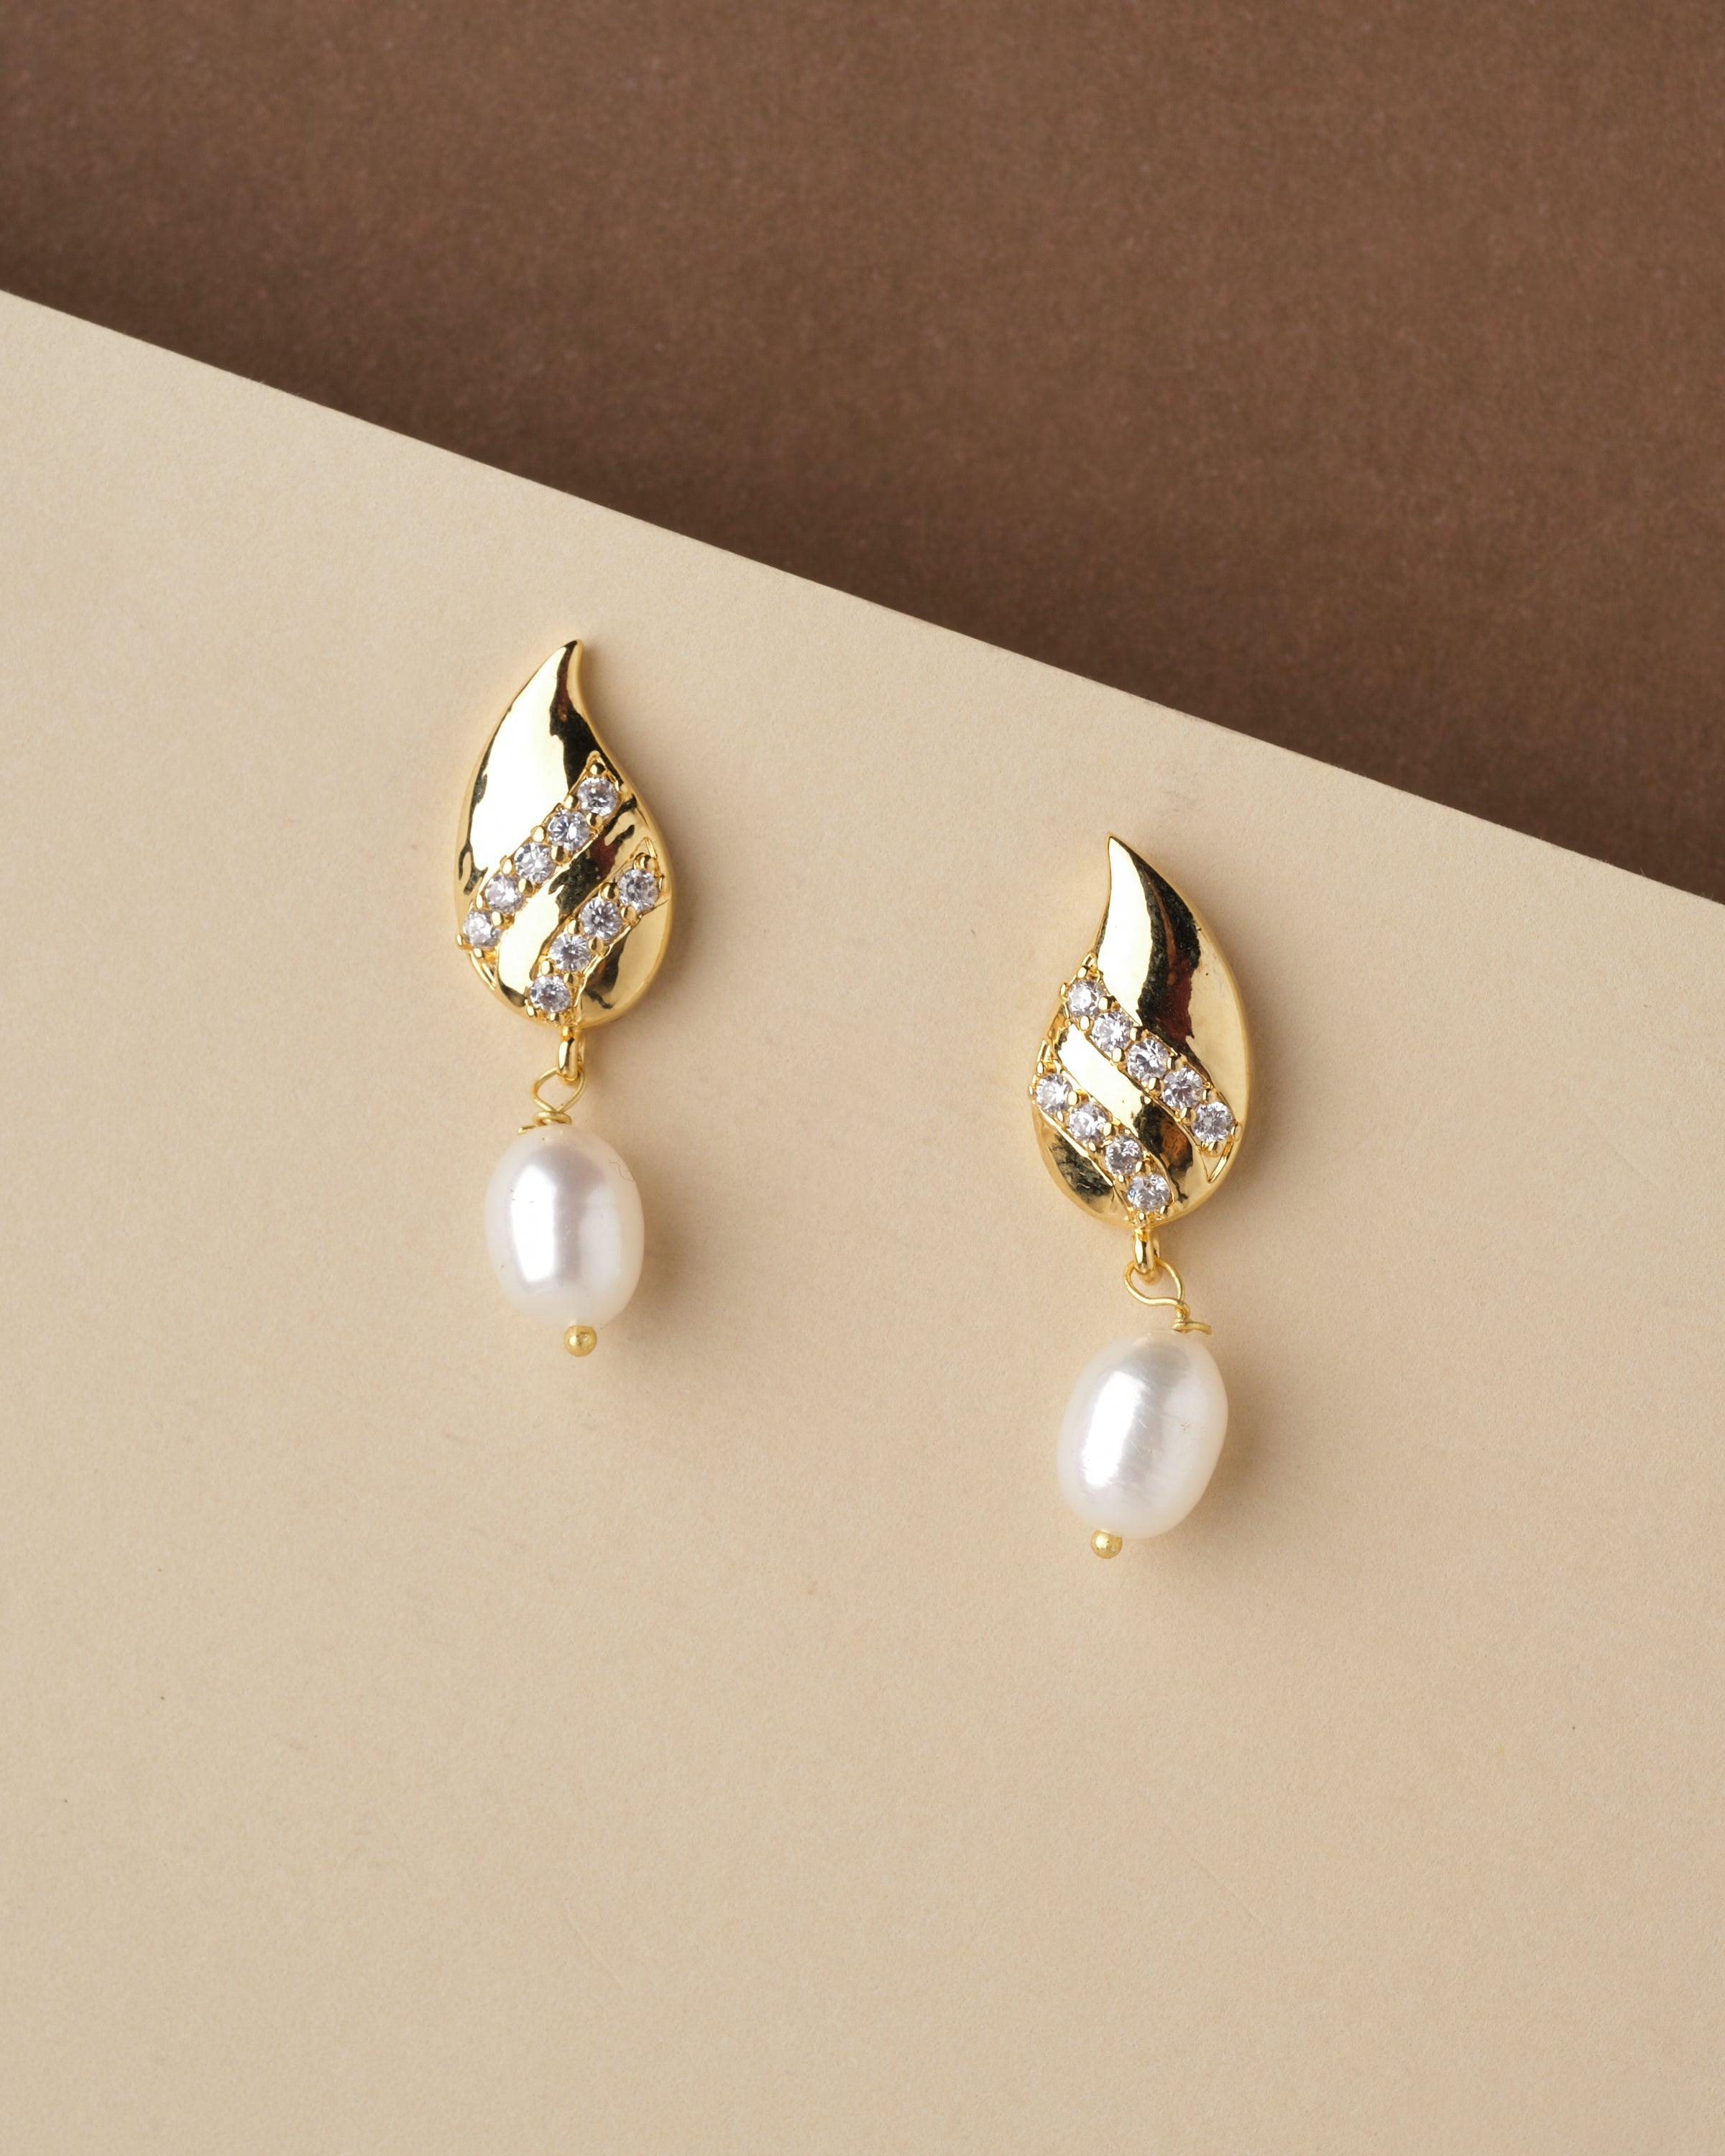 White Stone Stud Earrings | C26-MASEP22-19 | Cilory.com